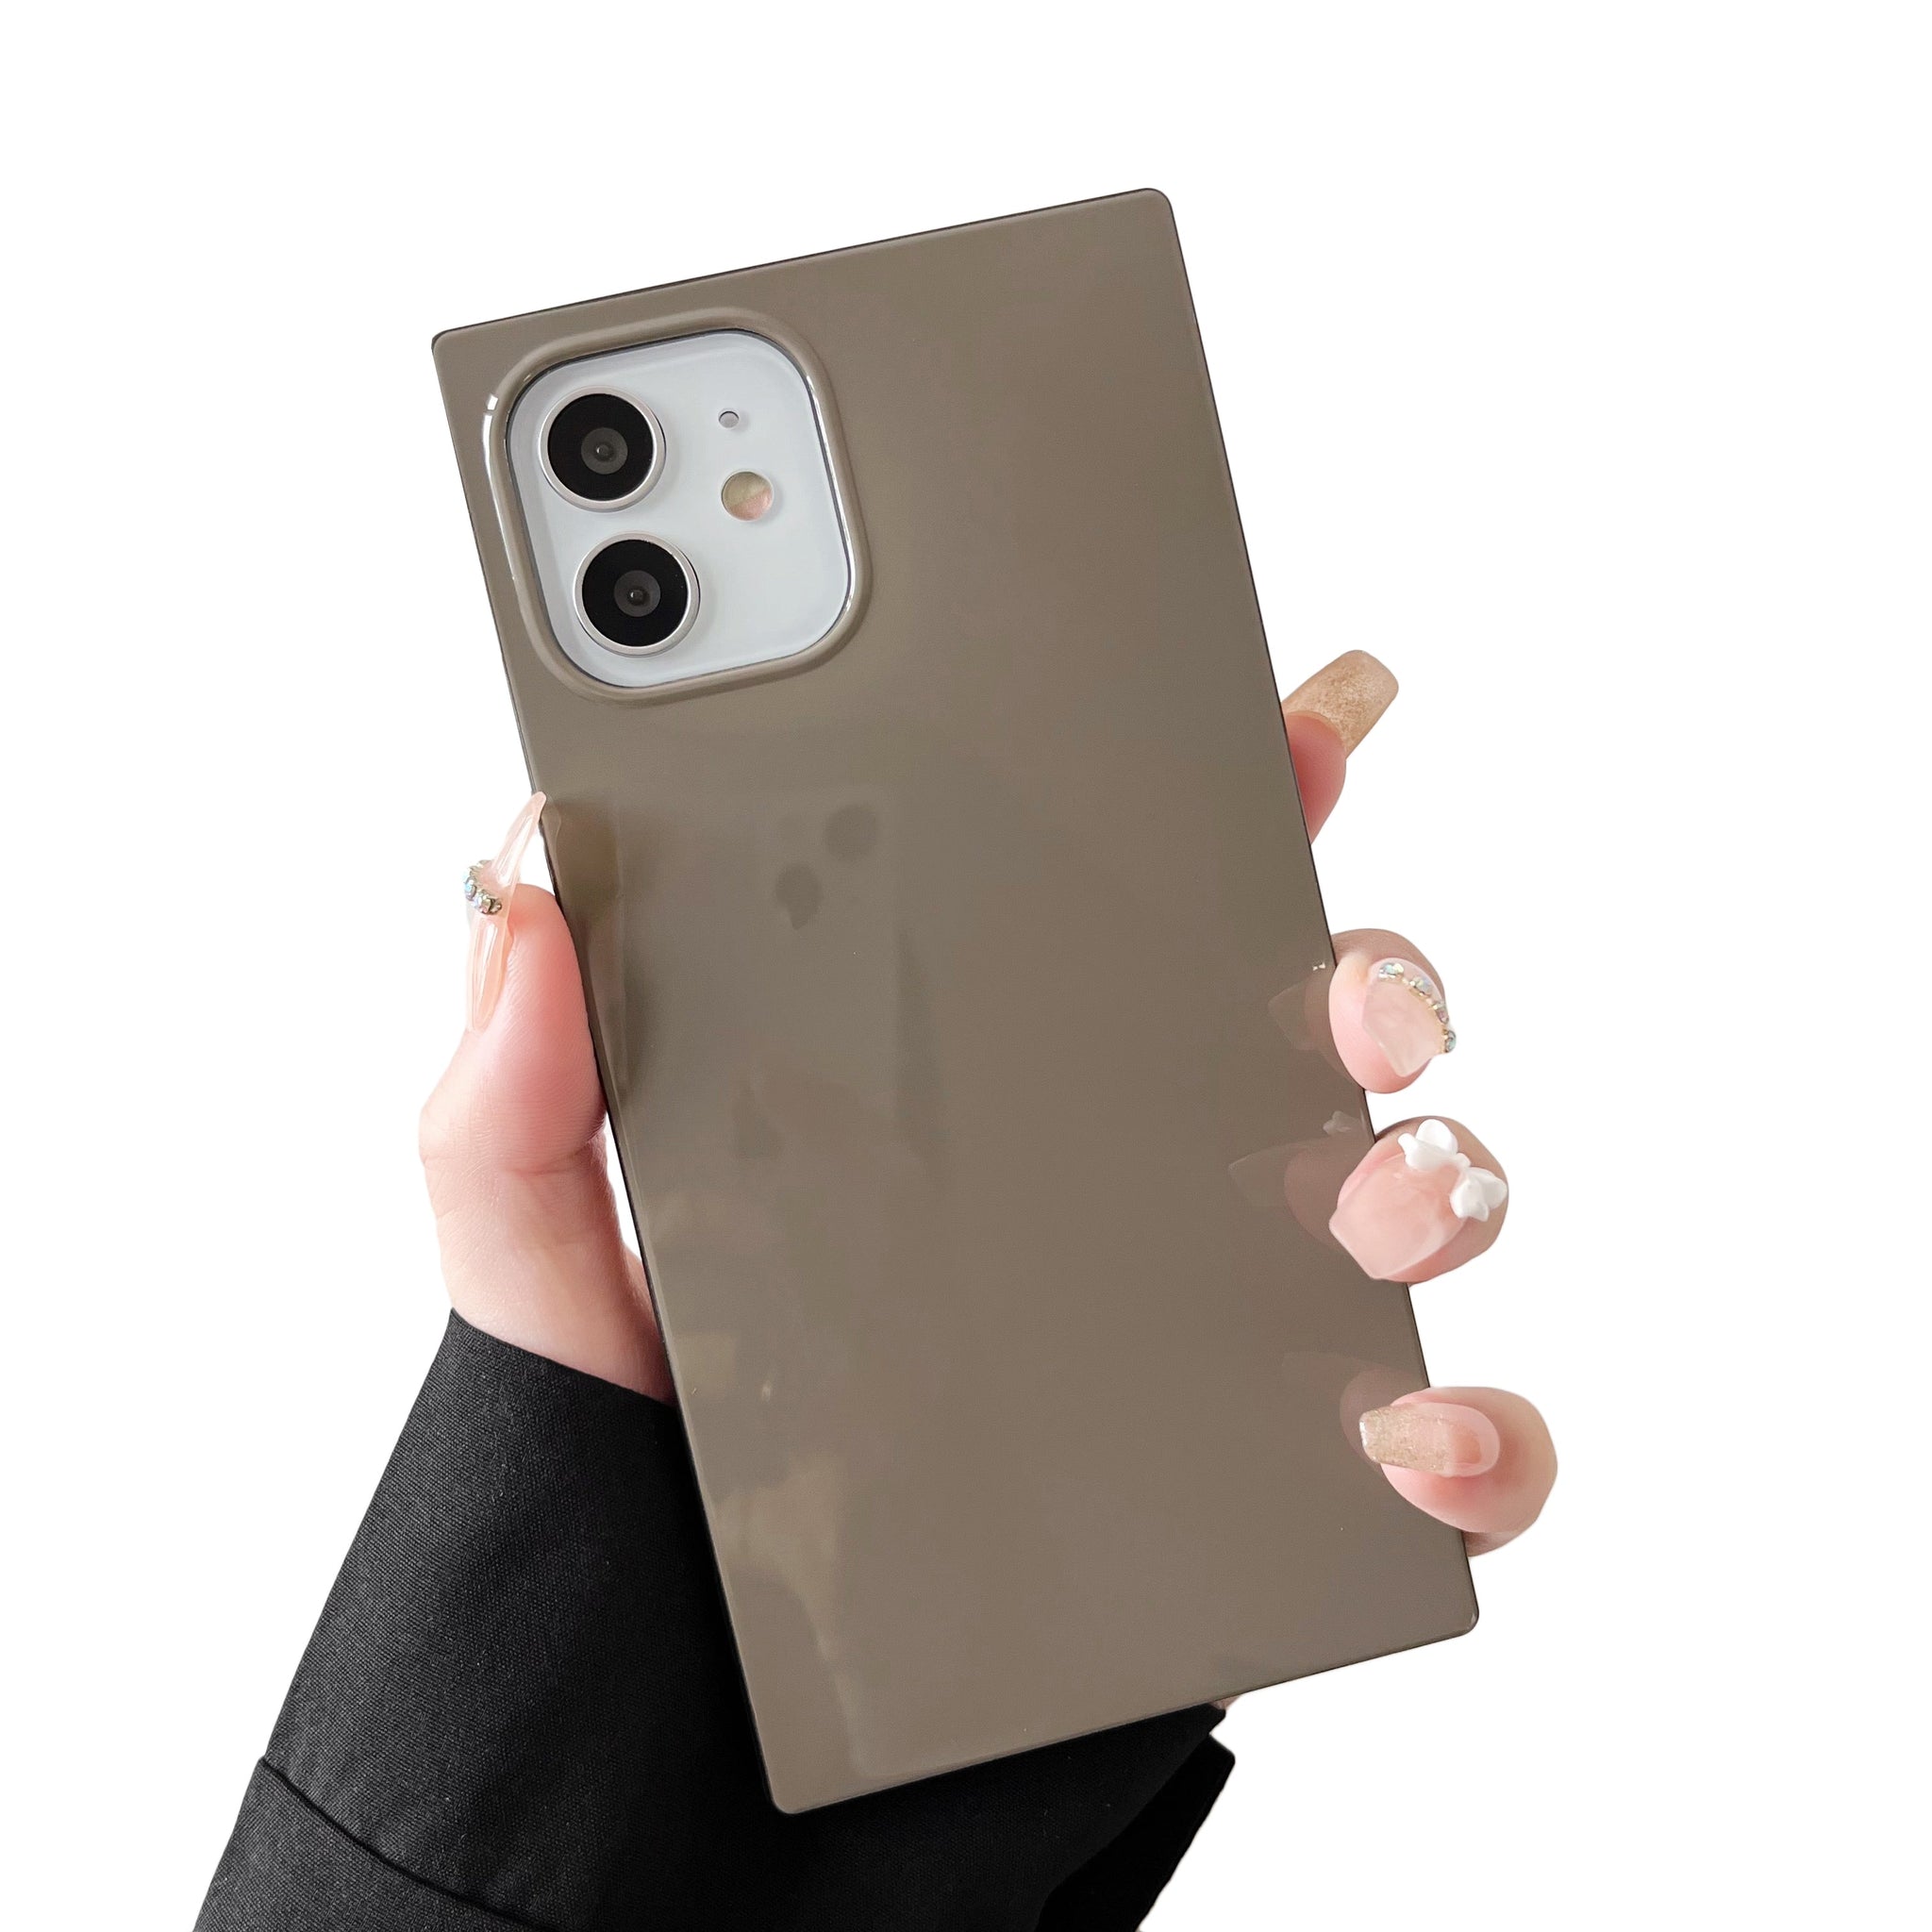 iPhone 12 Pro Max Case Square Neutral Plain Color (Elephant Gray)